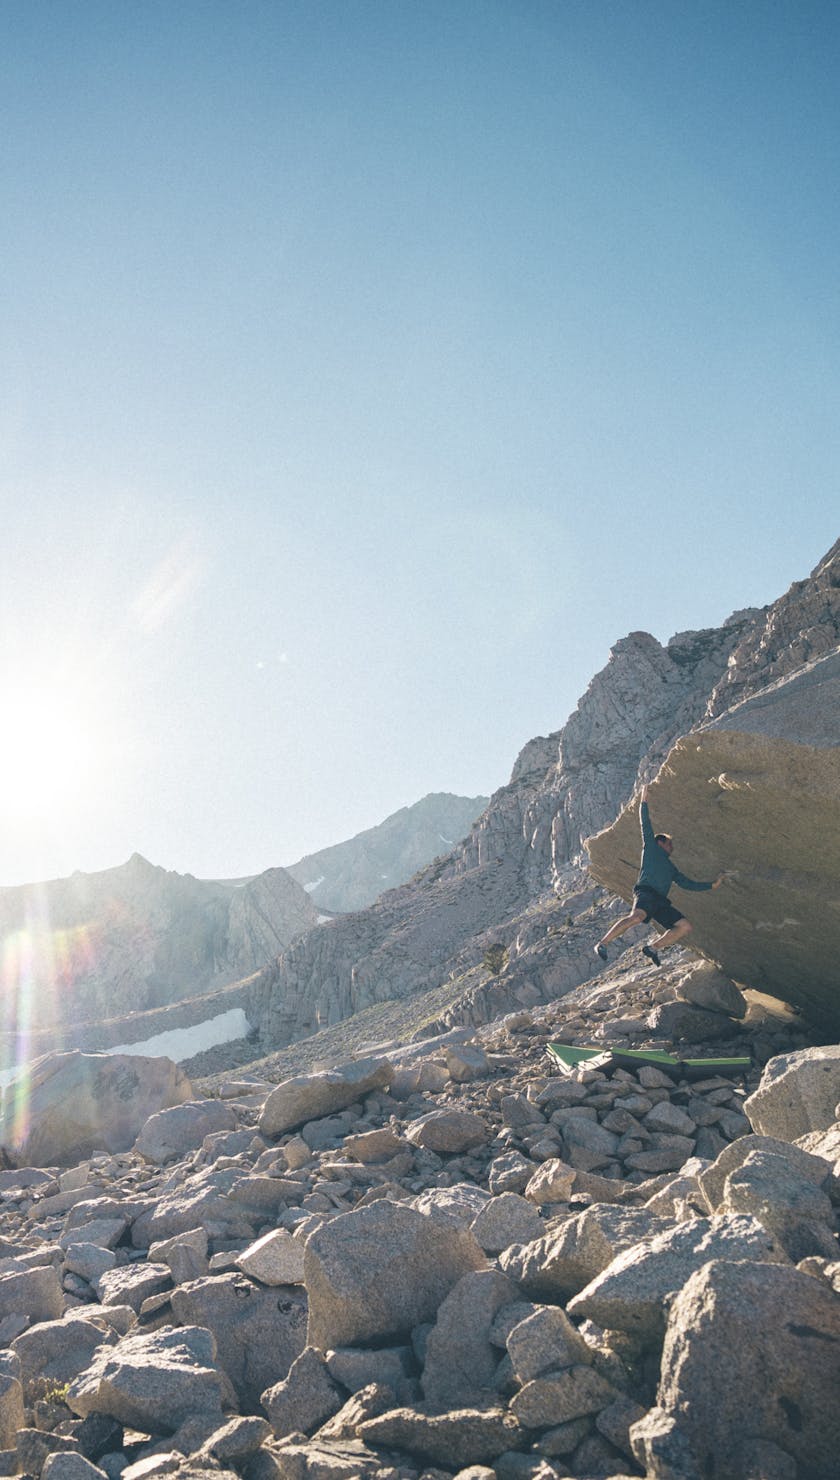 Alpenglow Family. BD athlete Carlo Traversi bouldering in the high Sierra sun. 